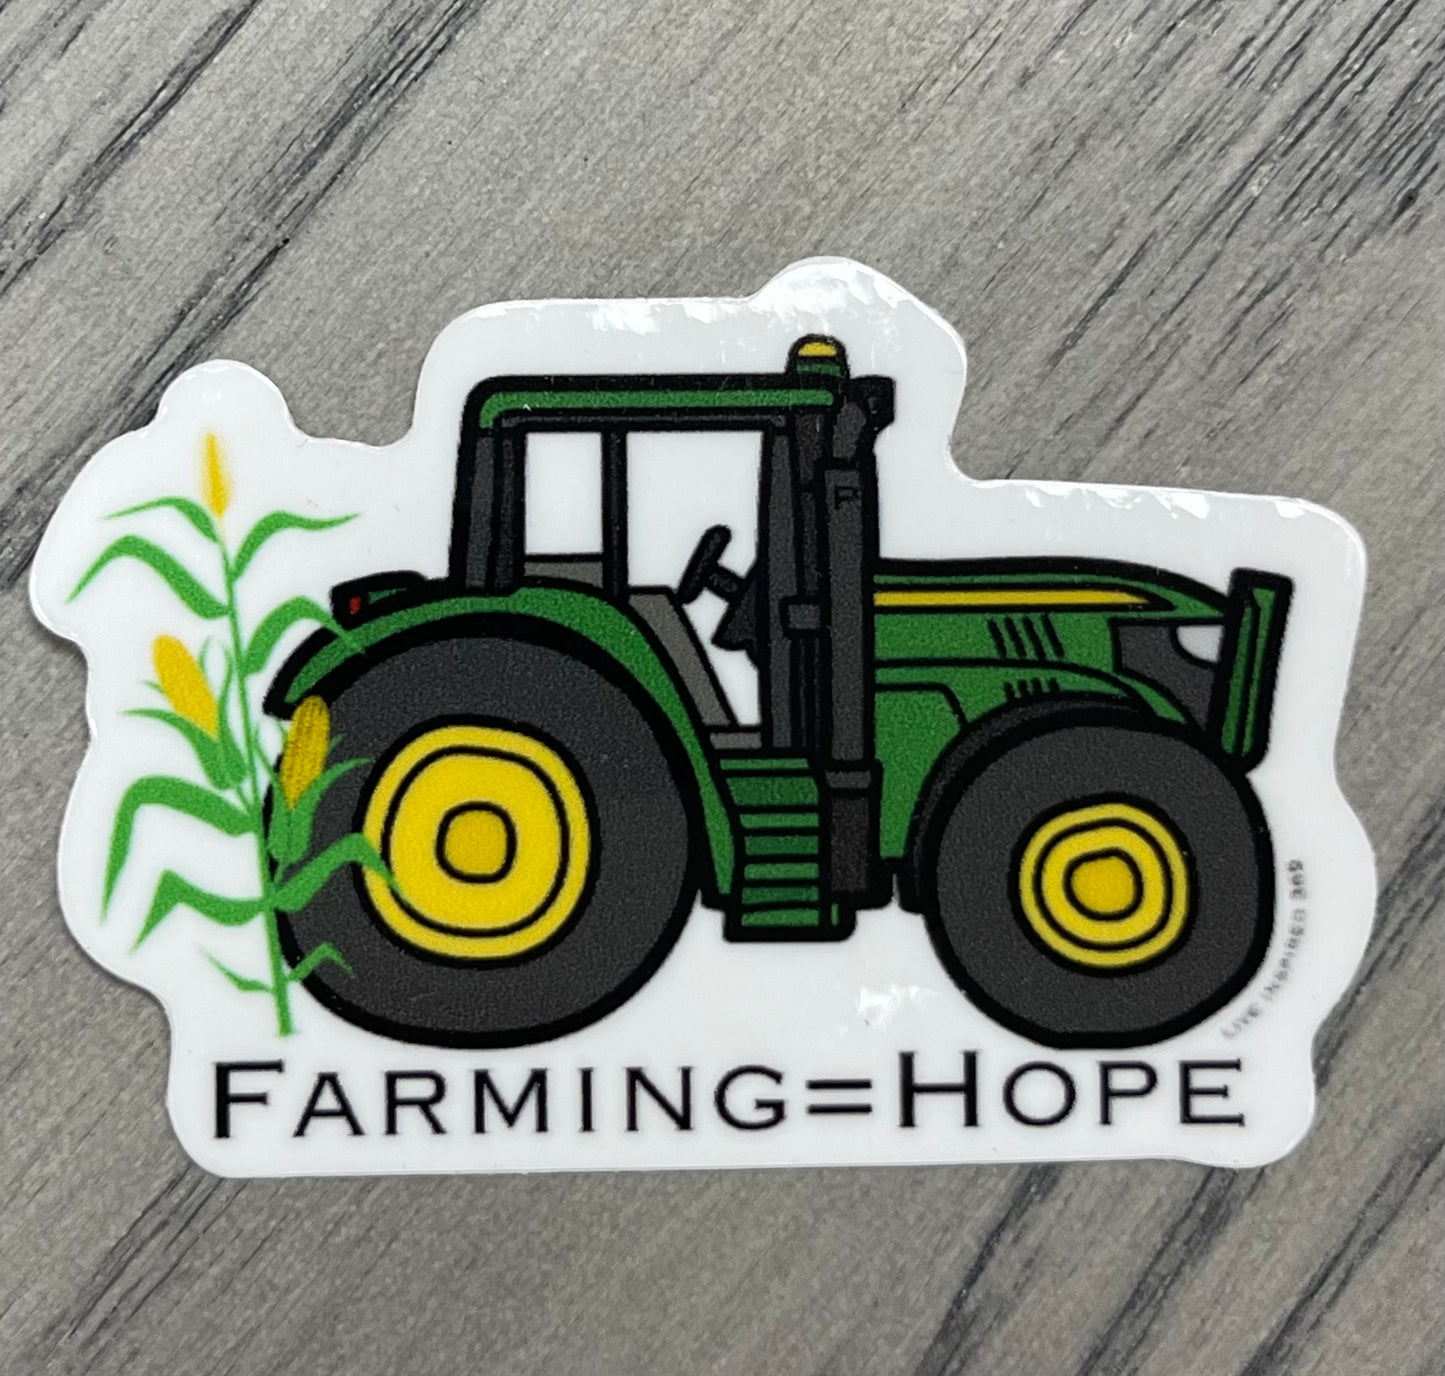 Farming=Hope Sticker